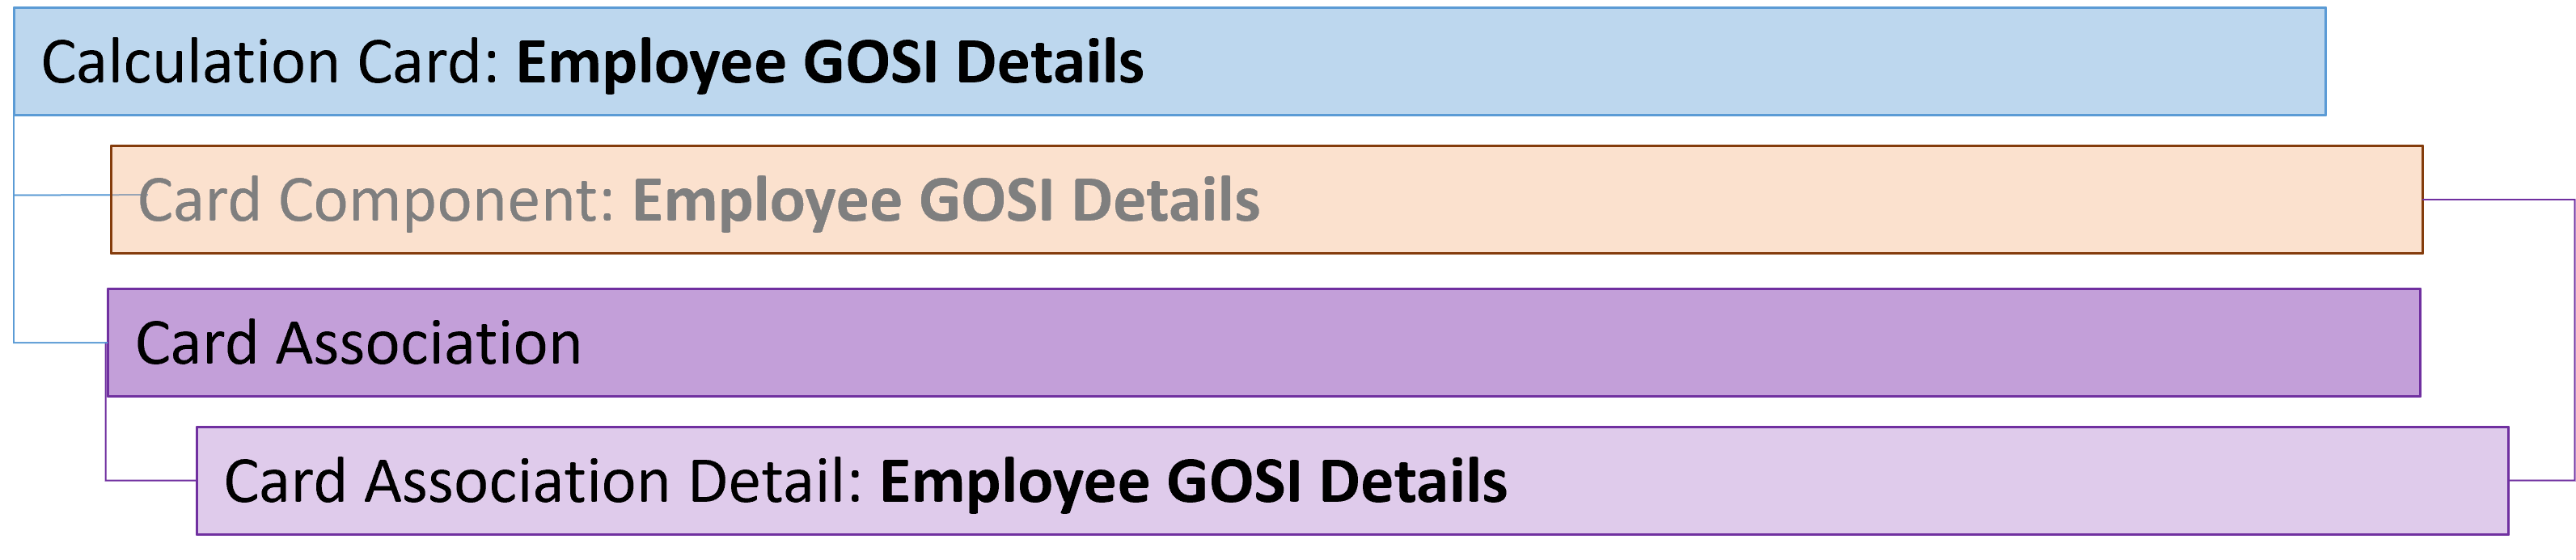 employee gosi details card association